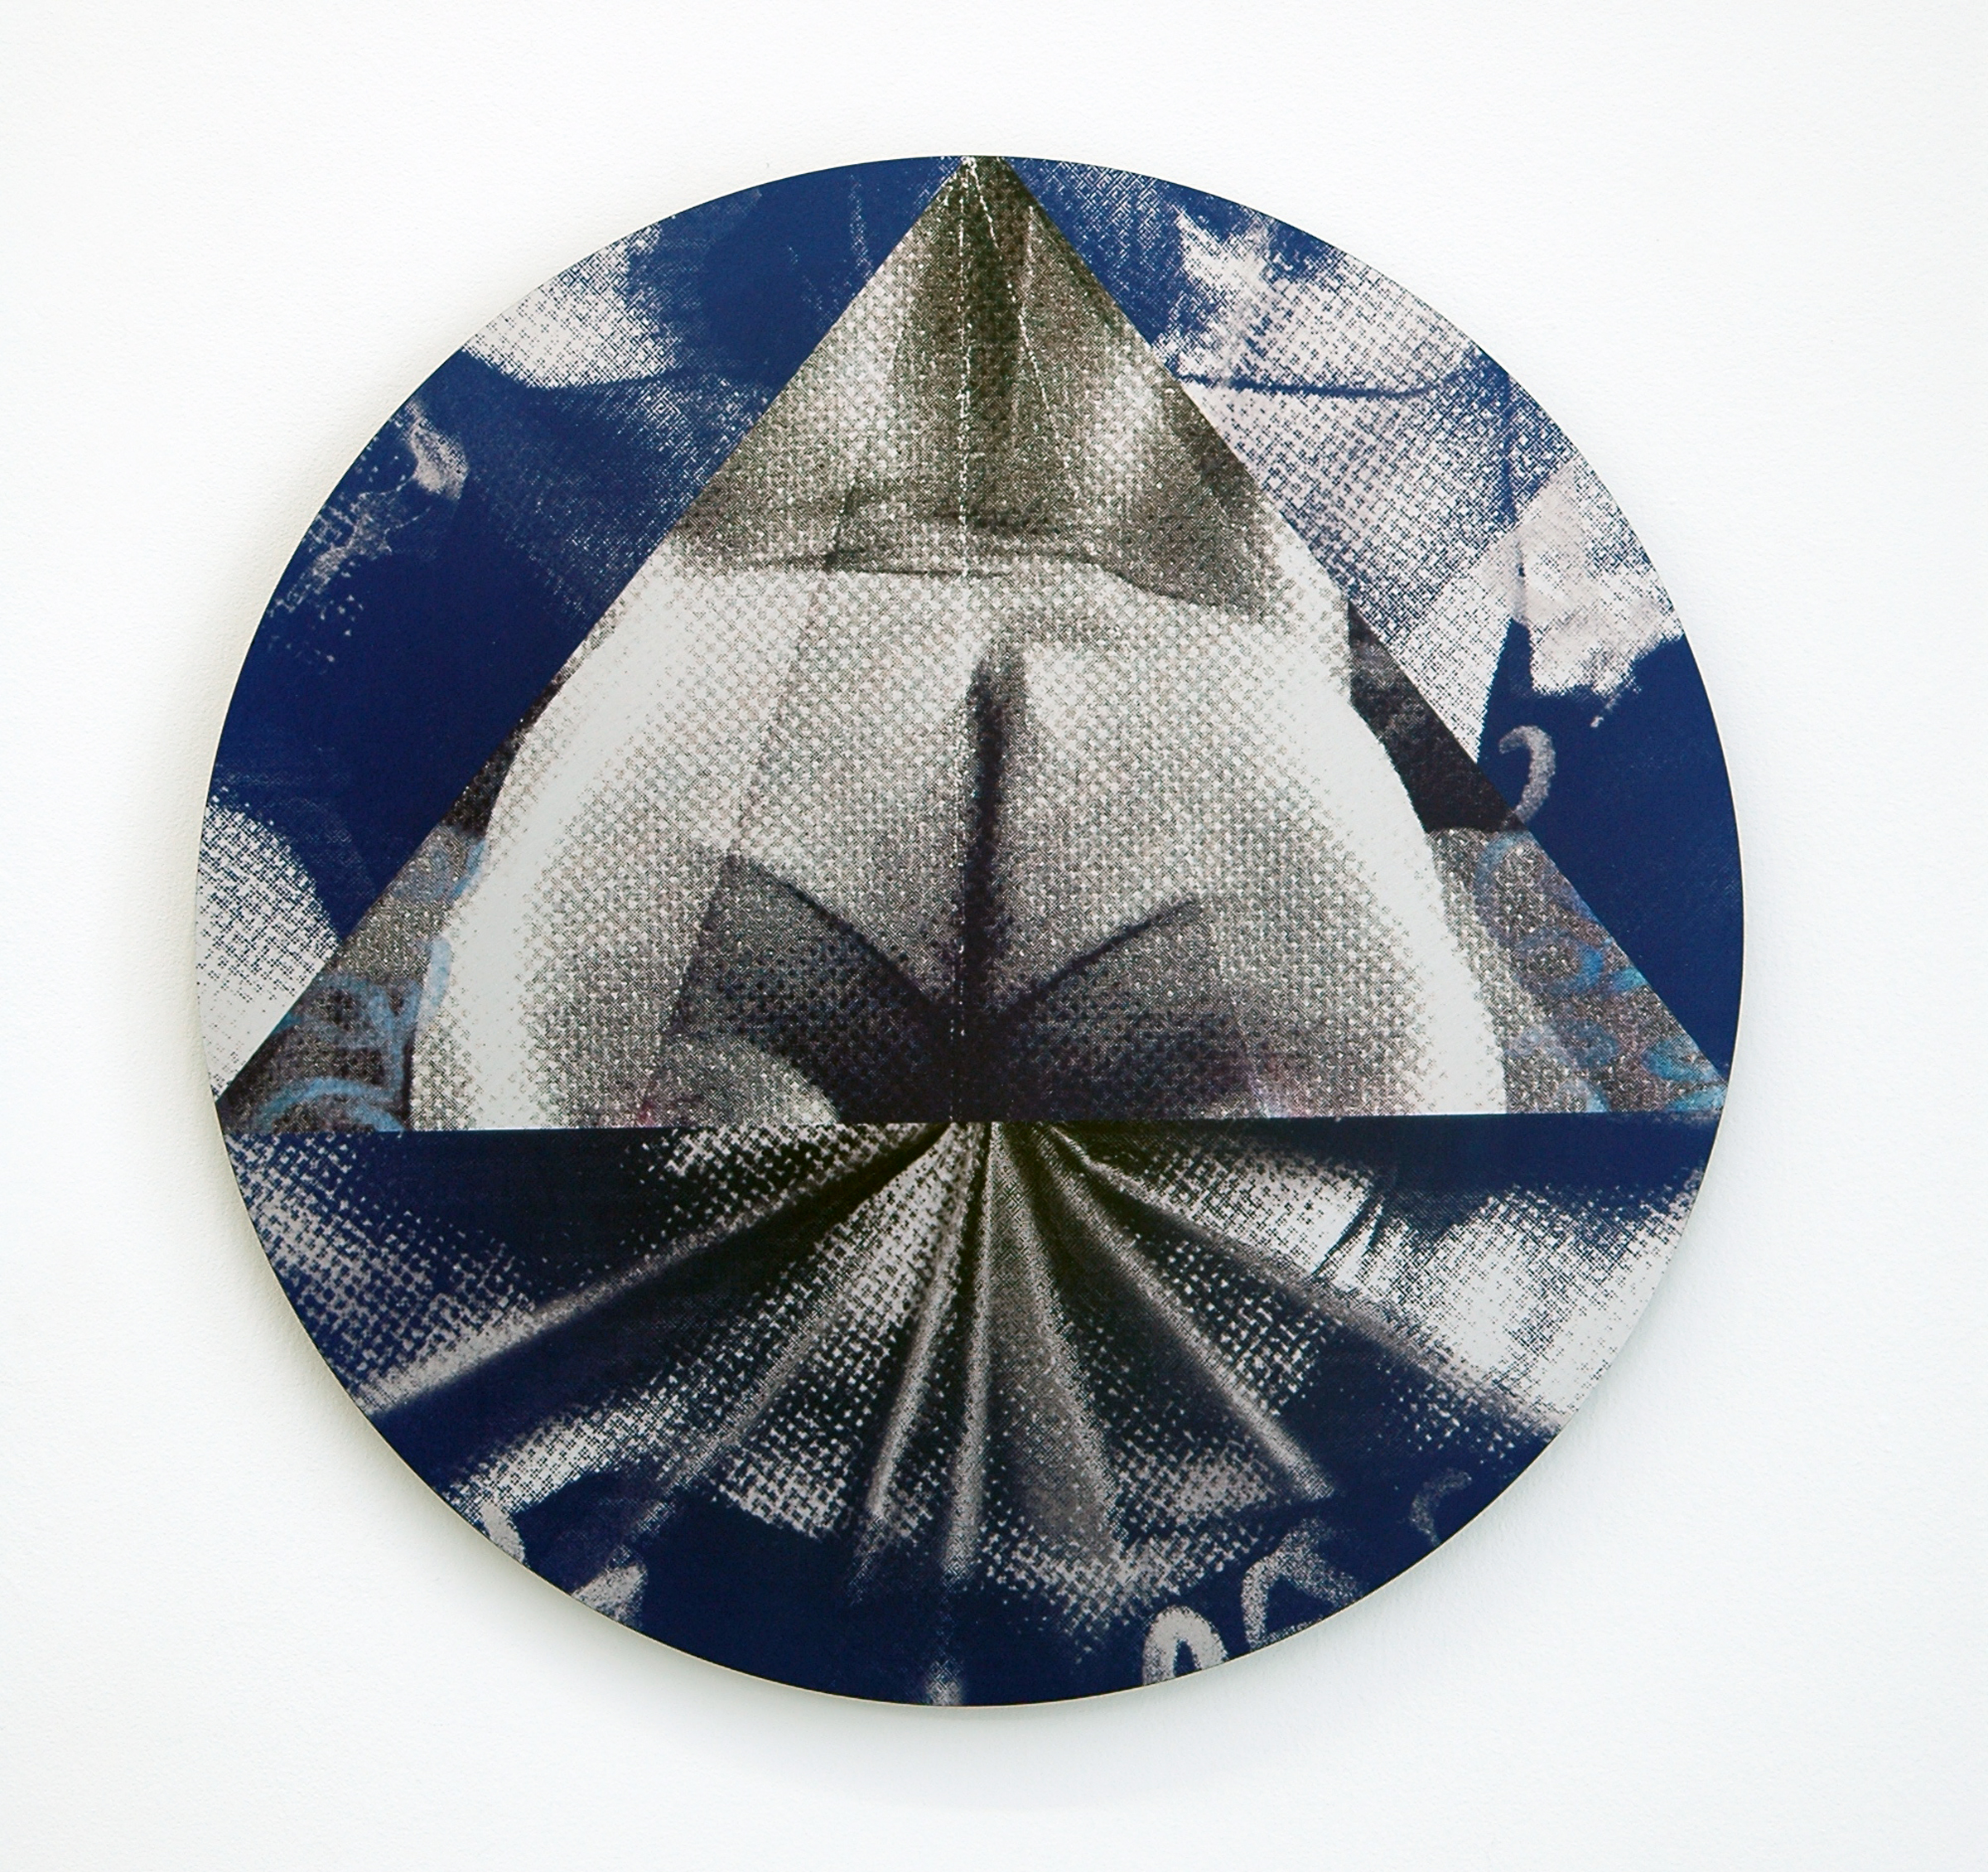   DERIC CARNER   Sexual Outlaw,&nbsp; print on metal, 16" diameter, 2014 